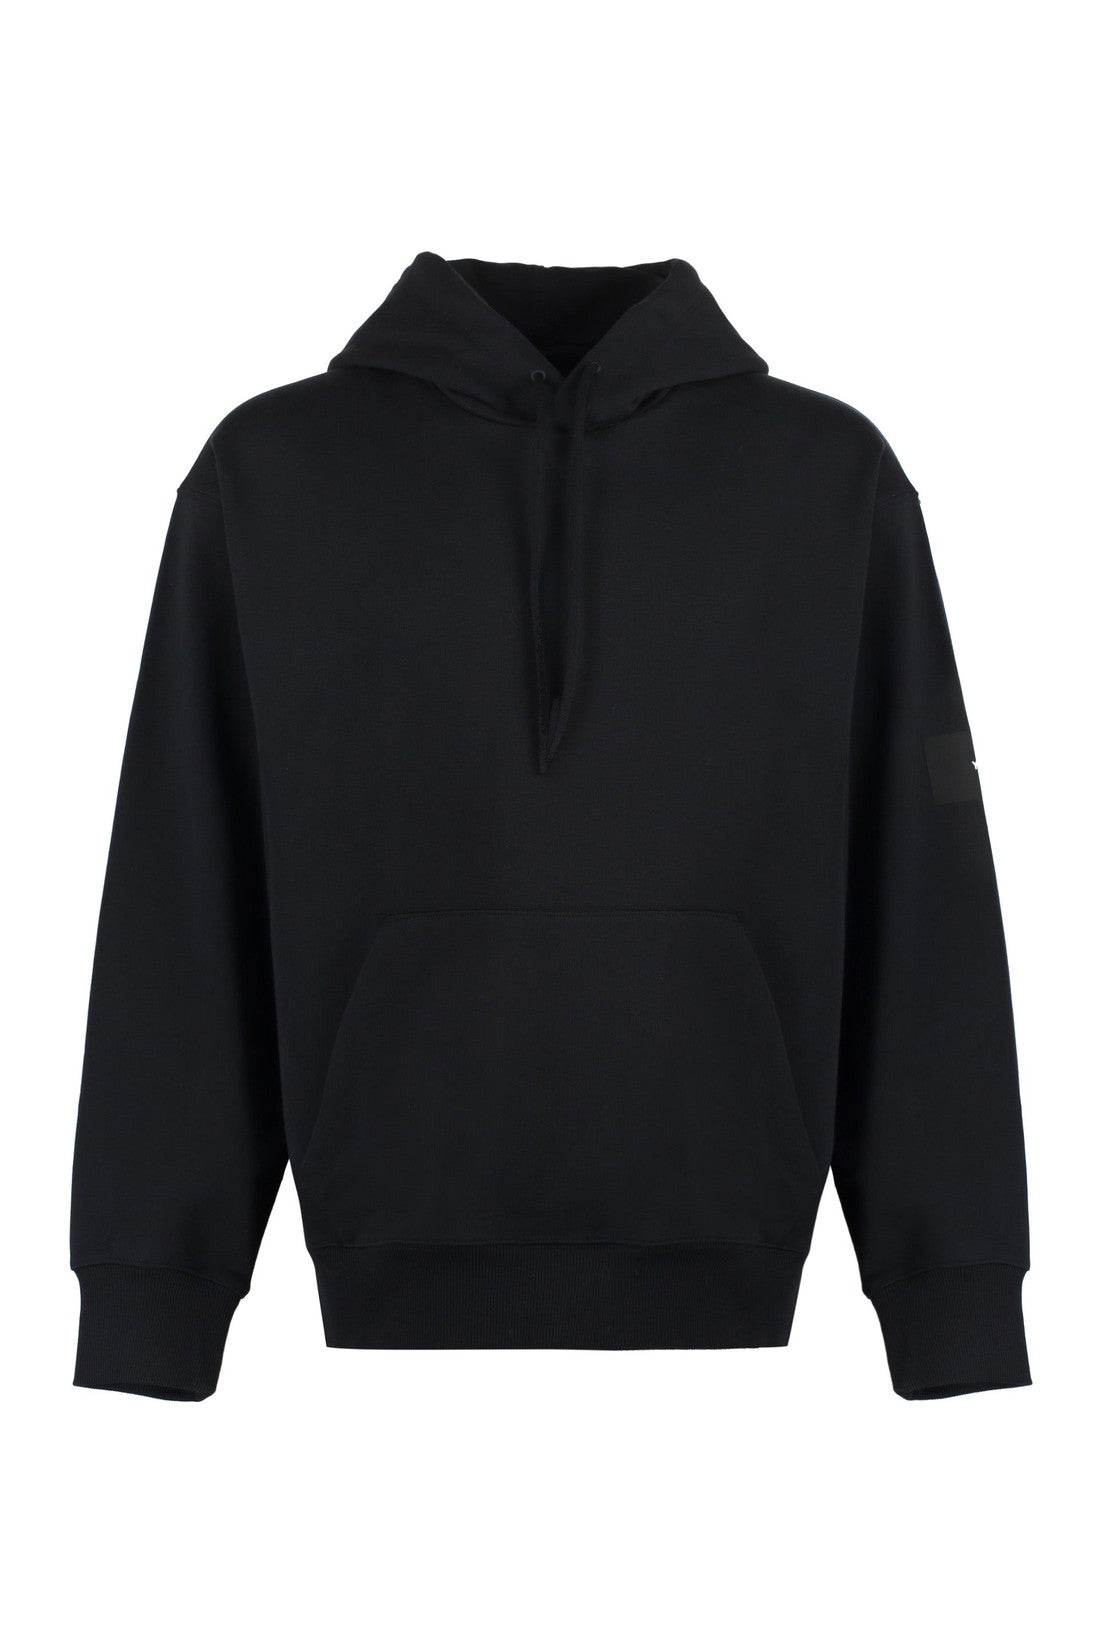 adidas Y-3-OUTLET-SALE-Cotton hoodie-ARCHIVIST